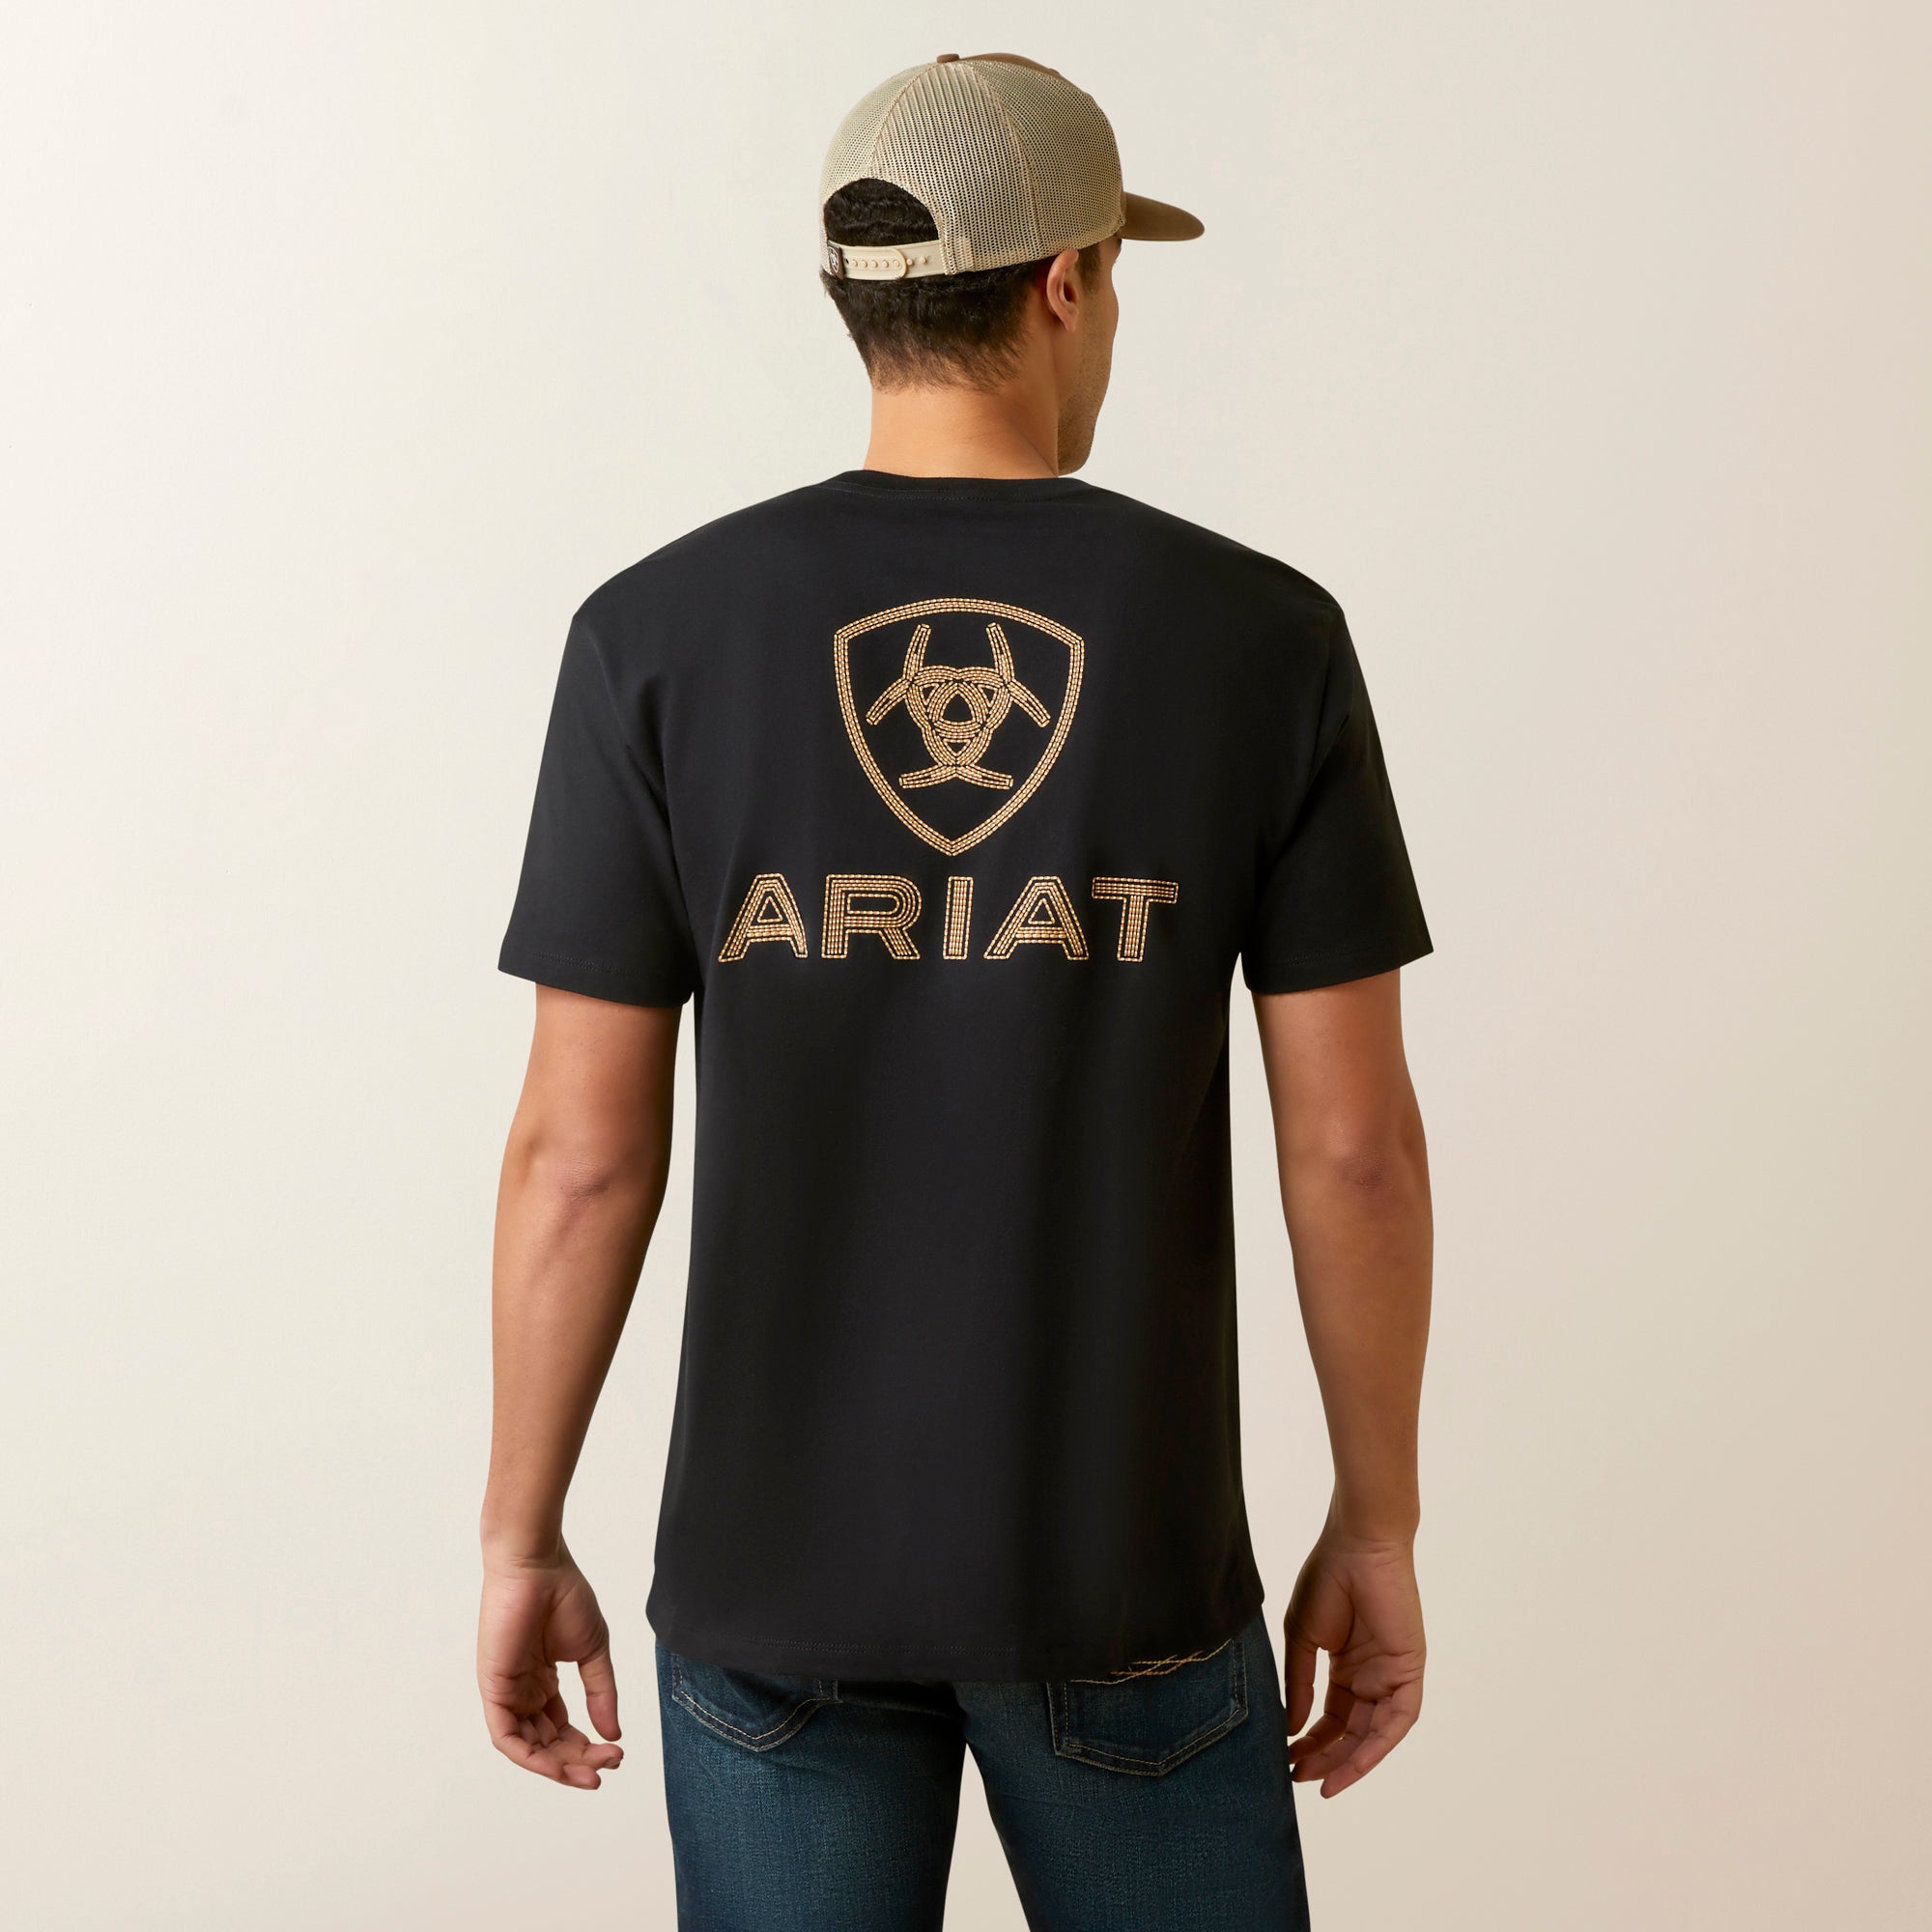 Ariat Men's Shield Stitch T-Shirt, Black